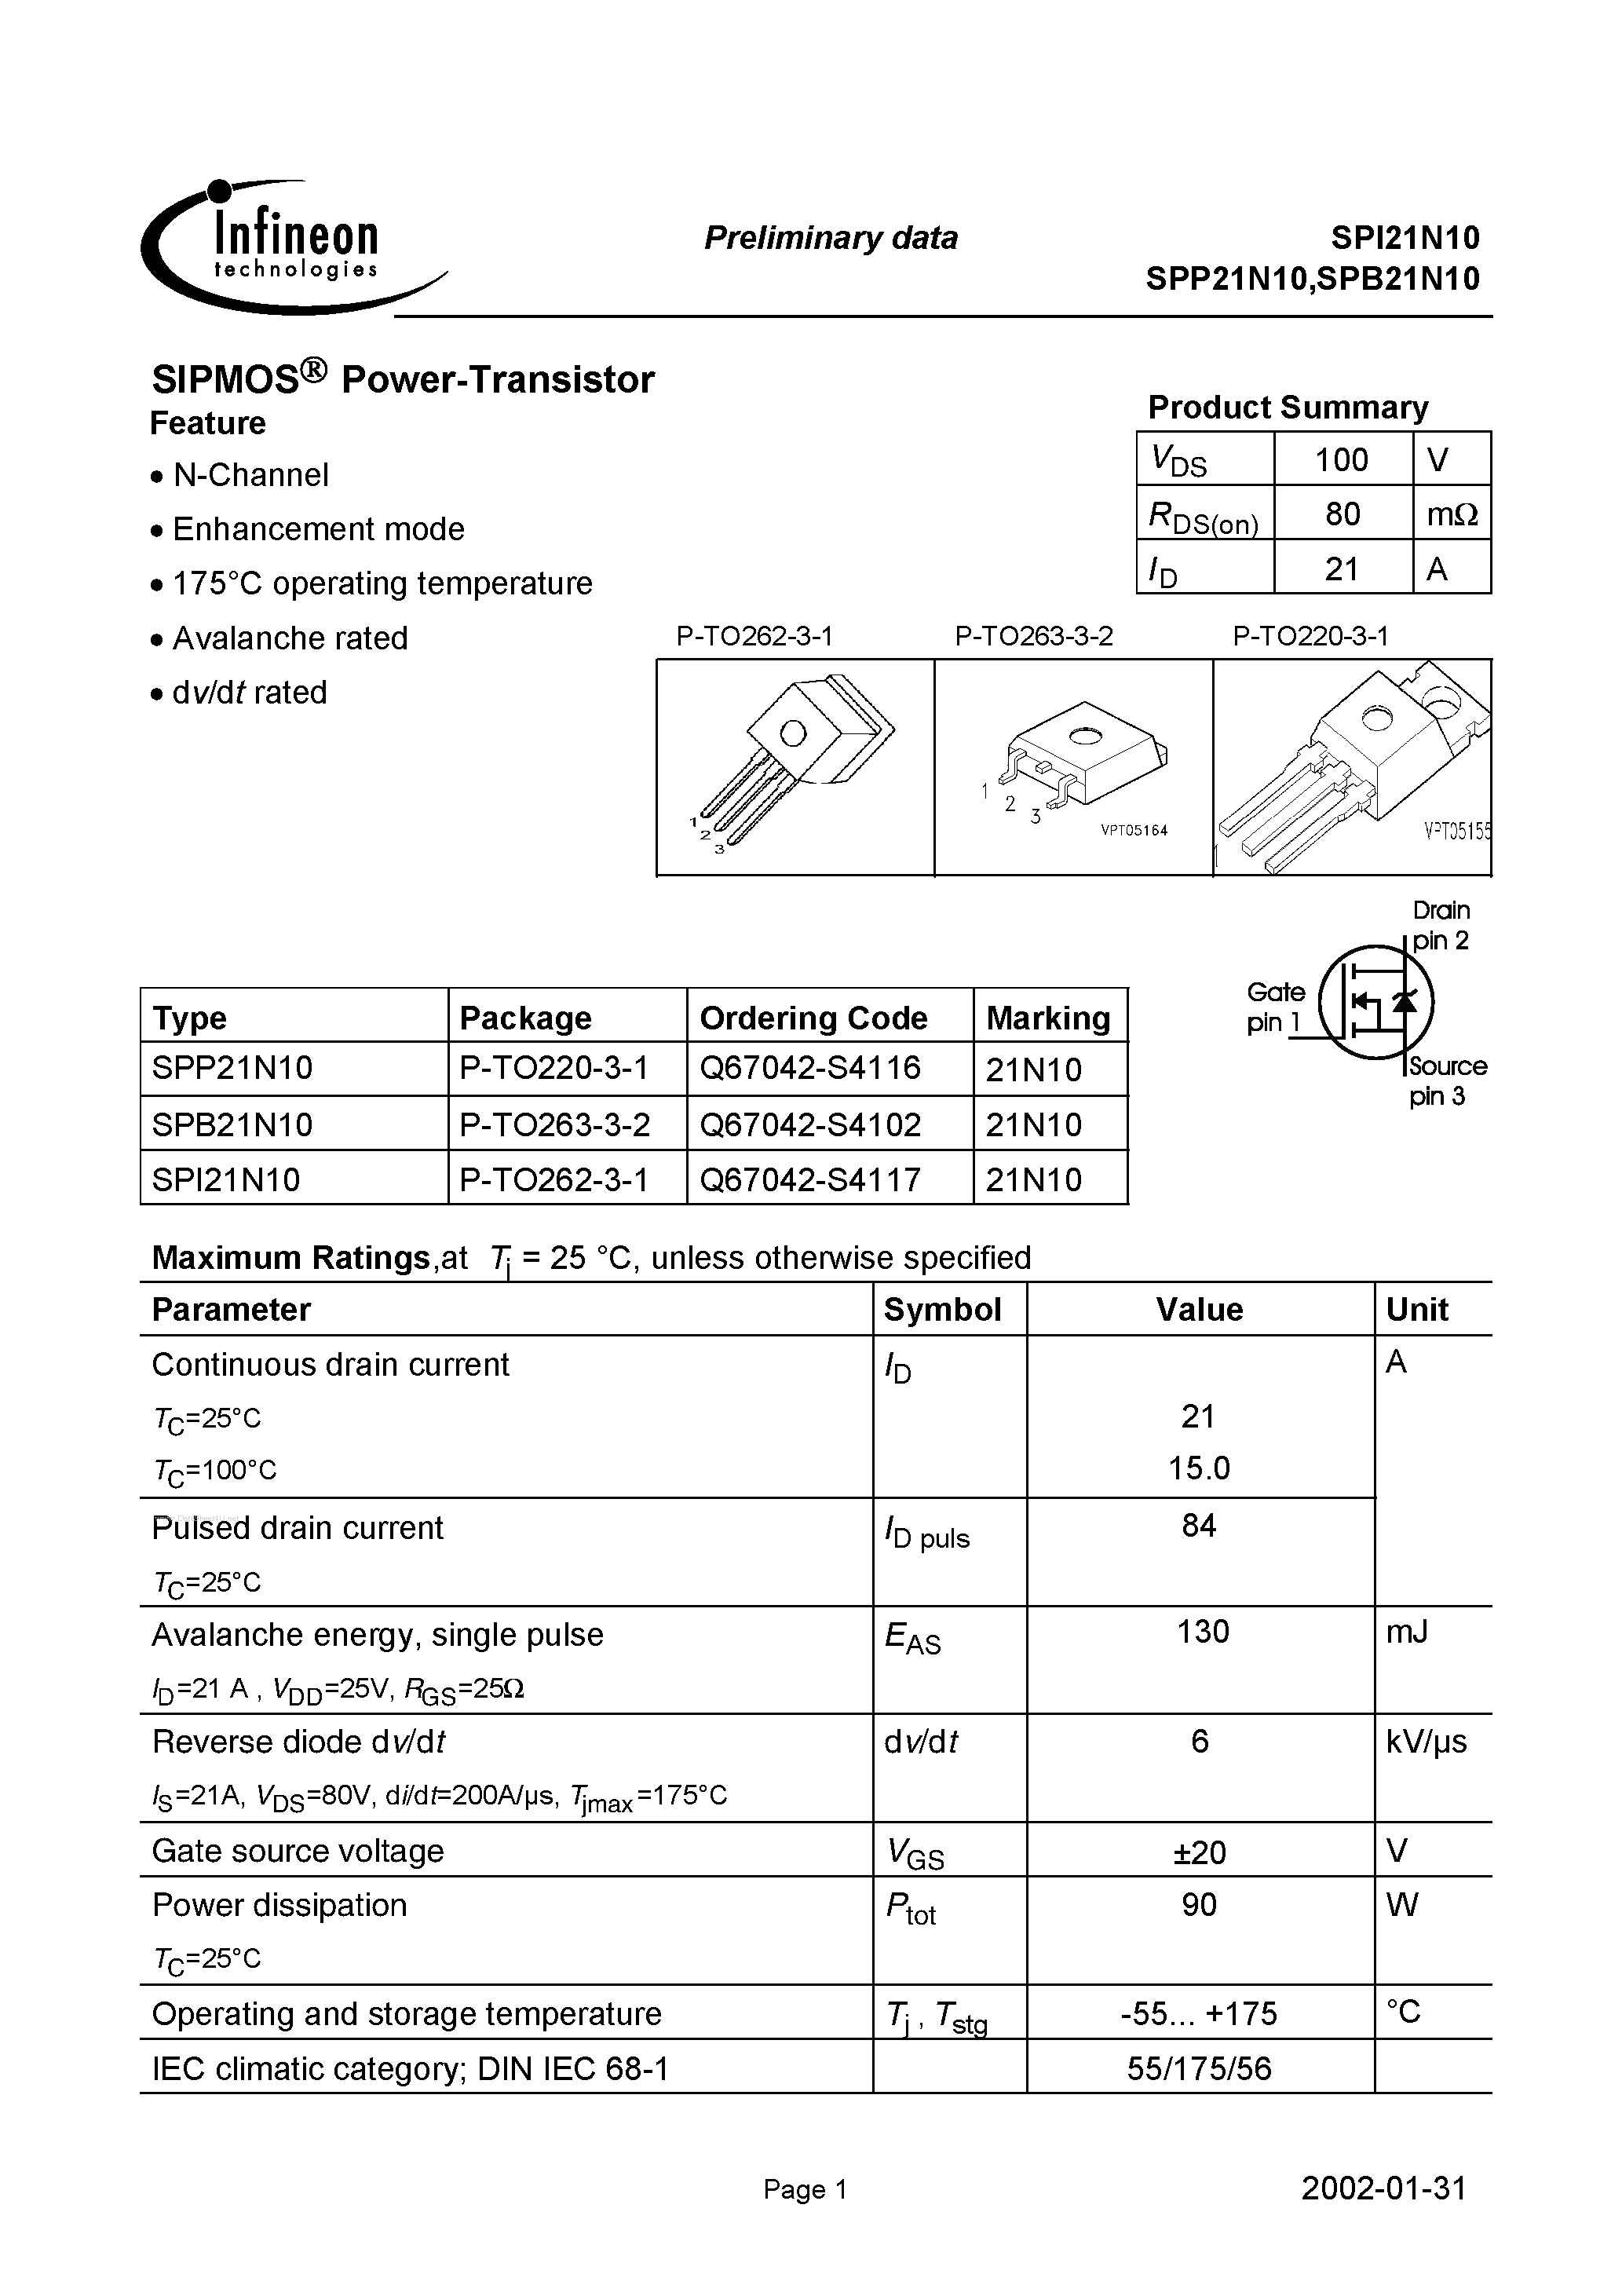 Даташит SPI21N10 - SIPMOS Power-Transistor страница 1